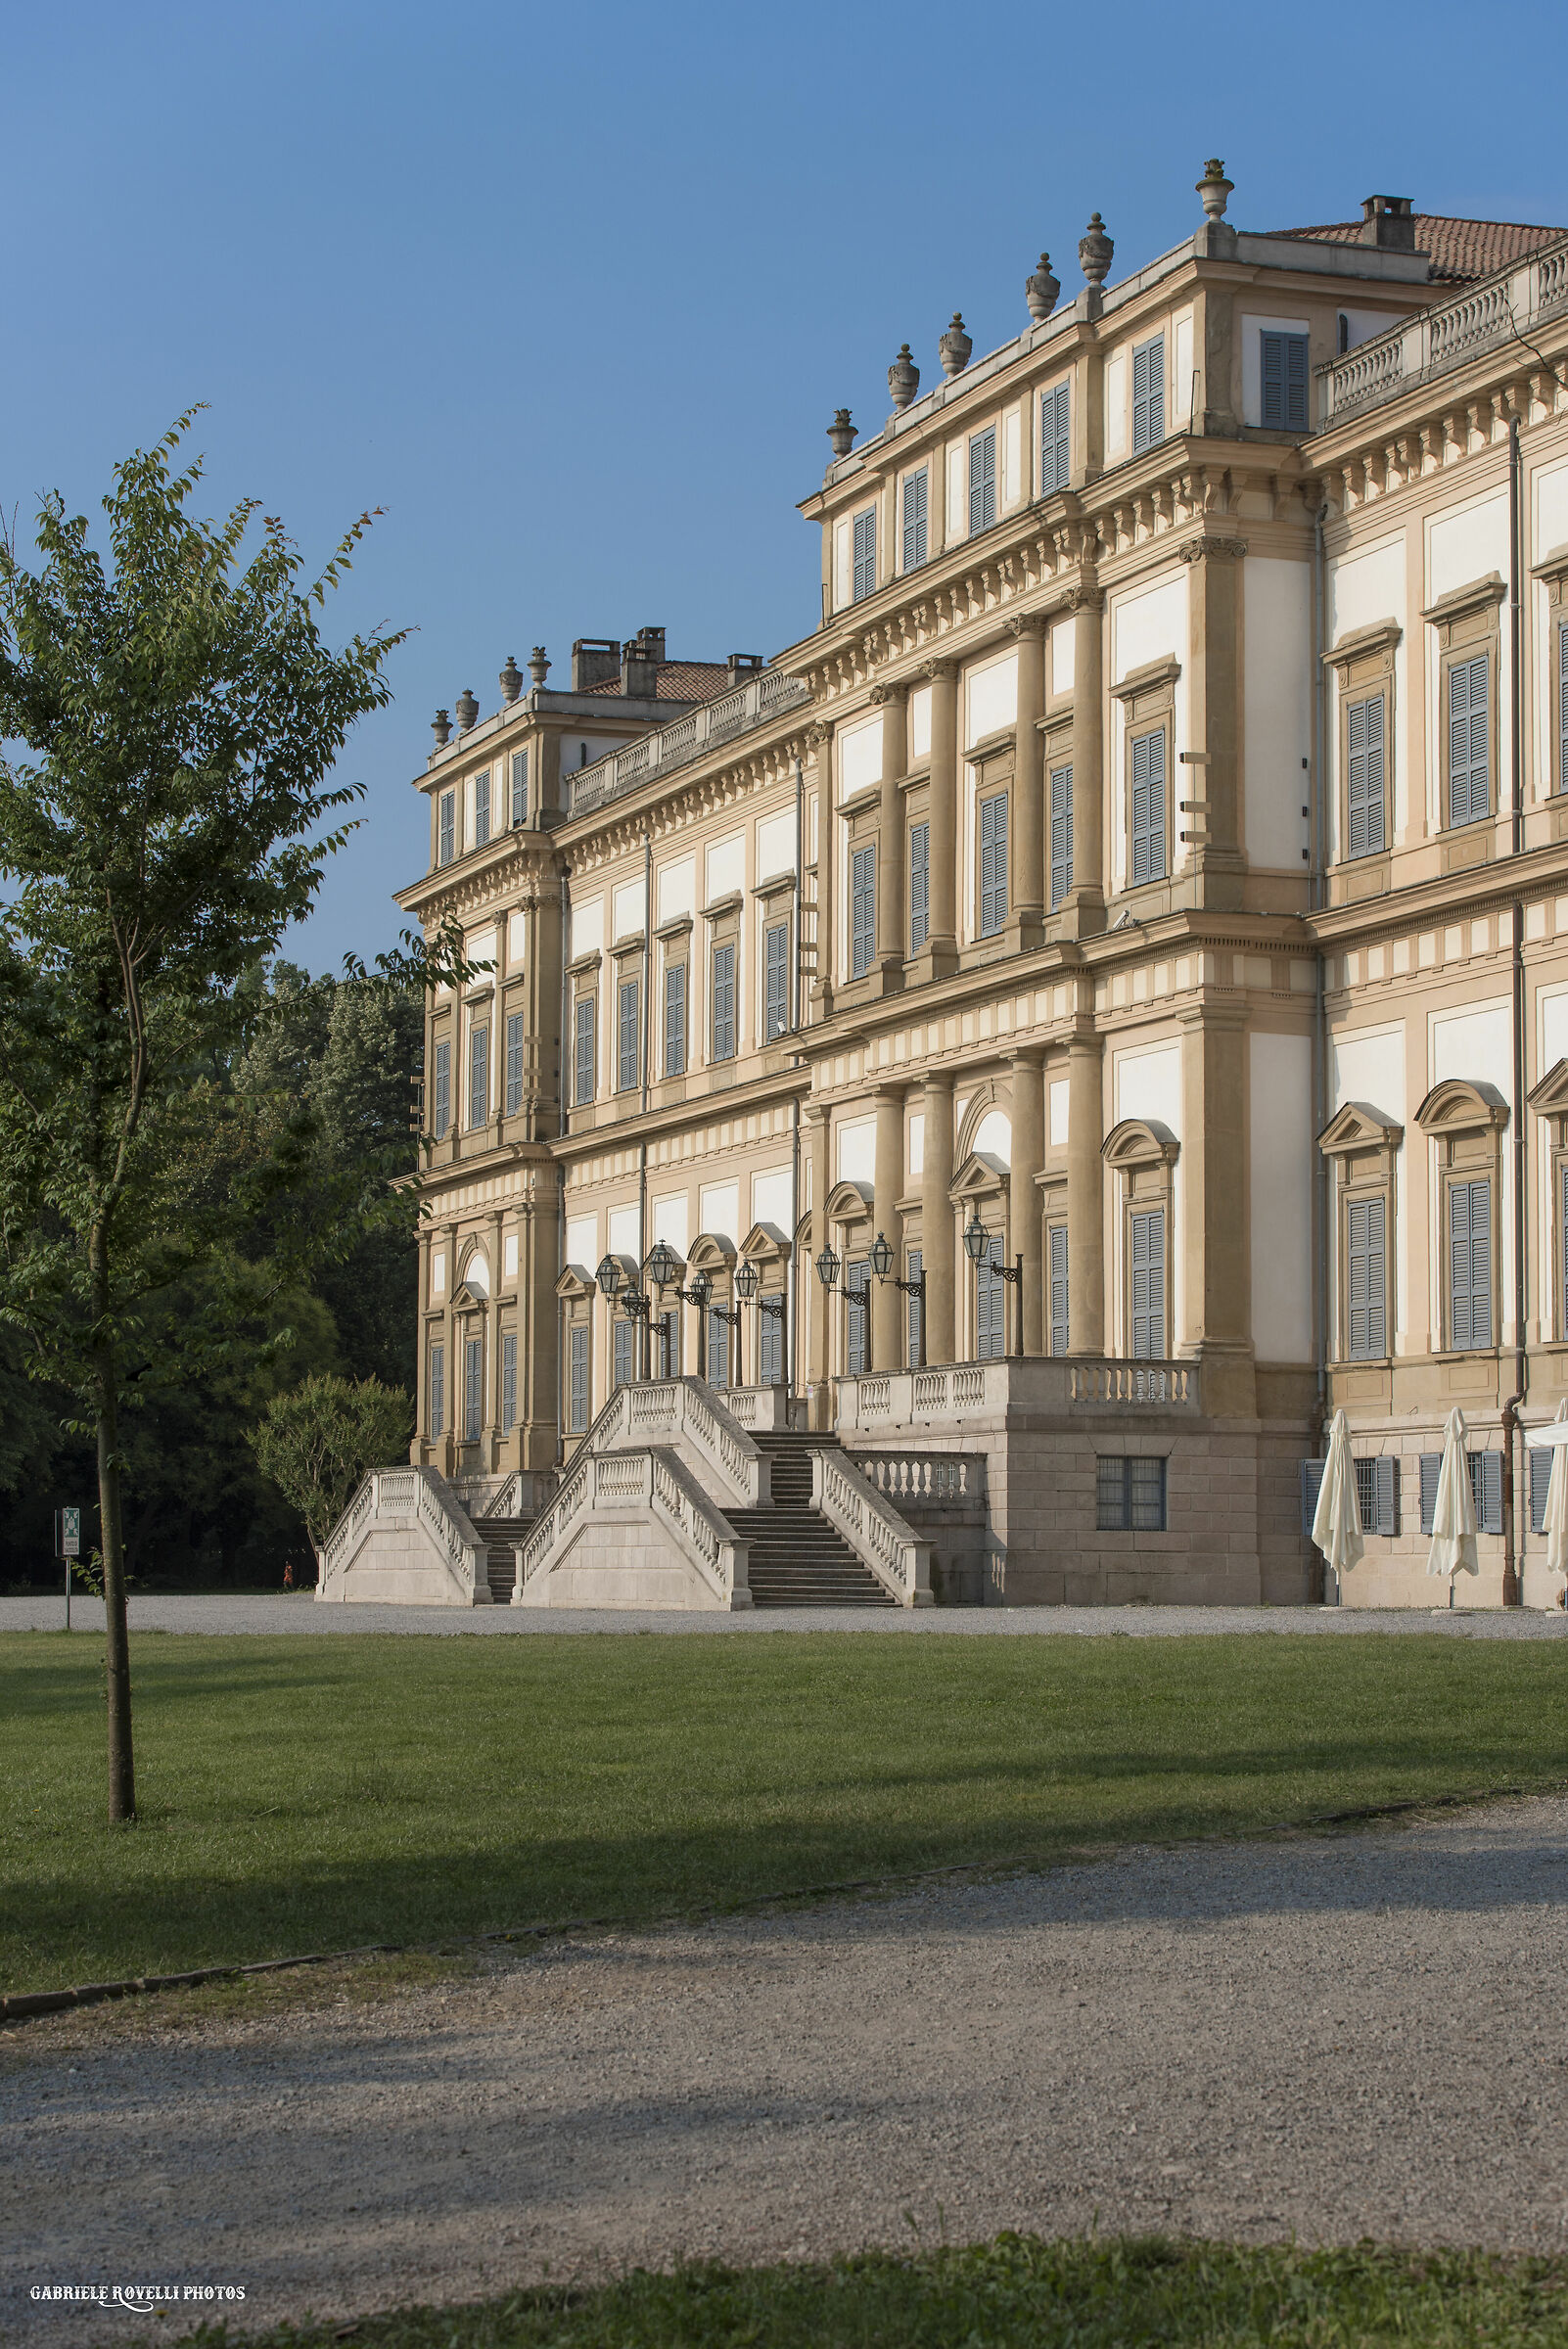 The sun kisses the fantastic royal villa of Monza...